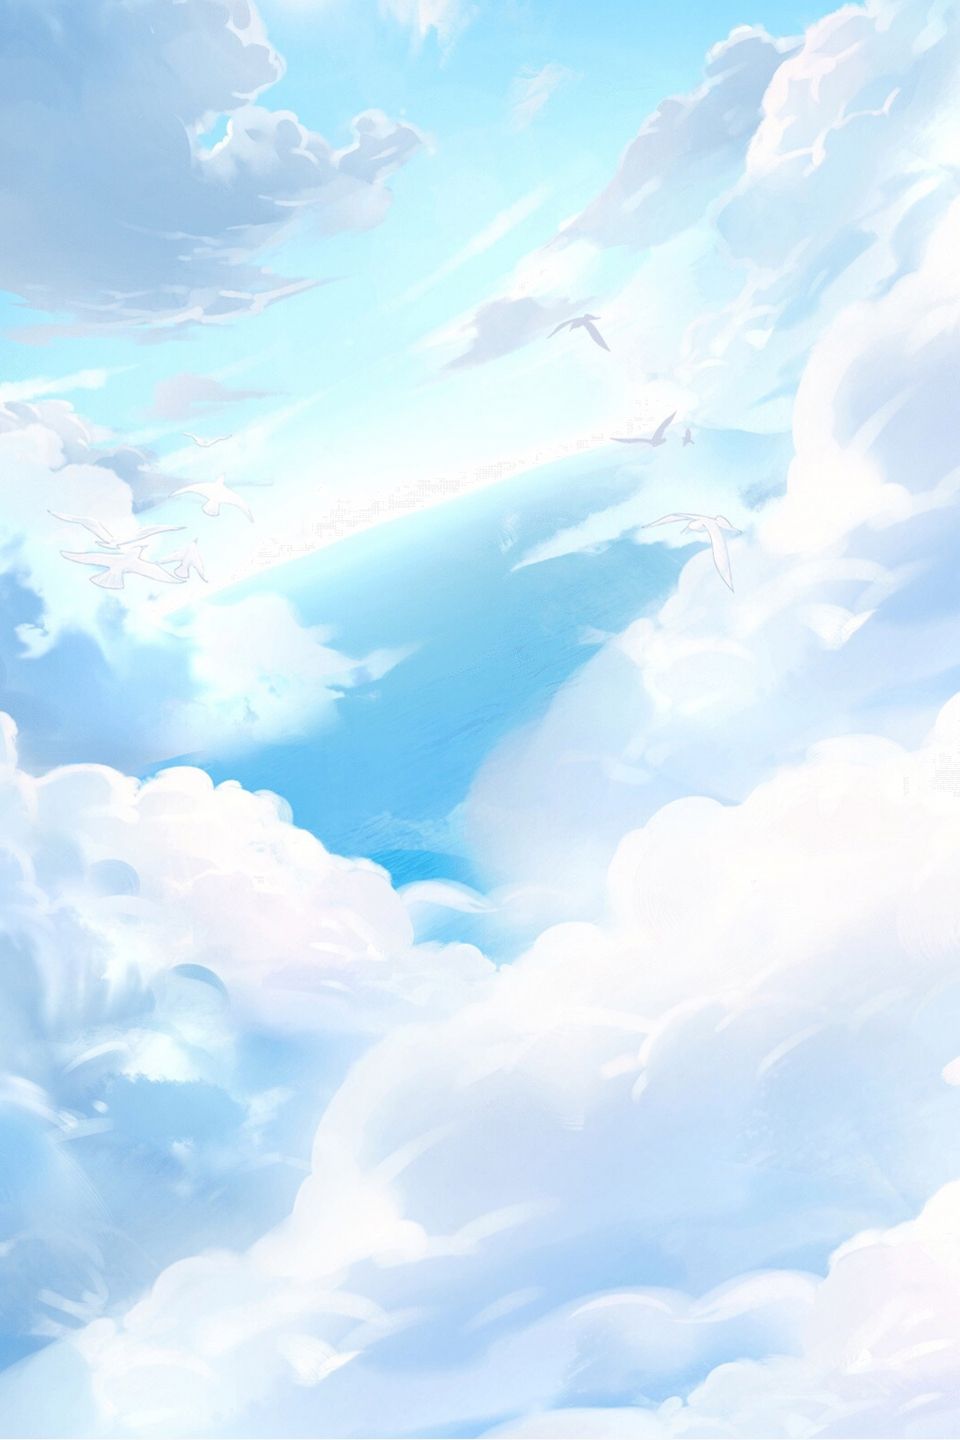 Cartoon Blue Sky White Clouds Download. Sky anime, Blue sky background, Blue sky wallpaper